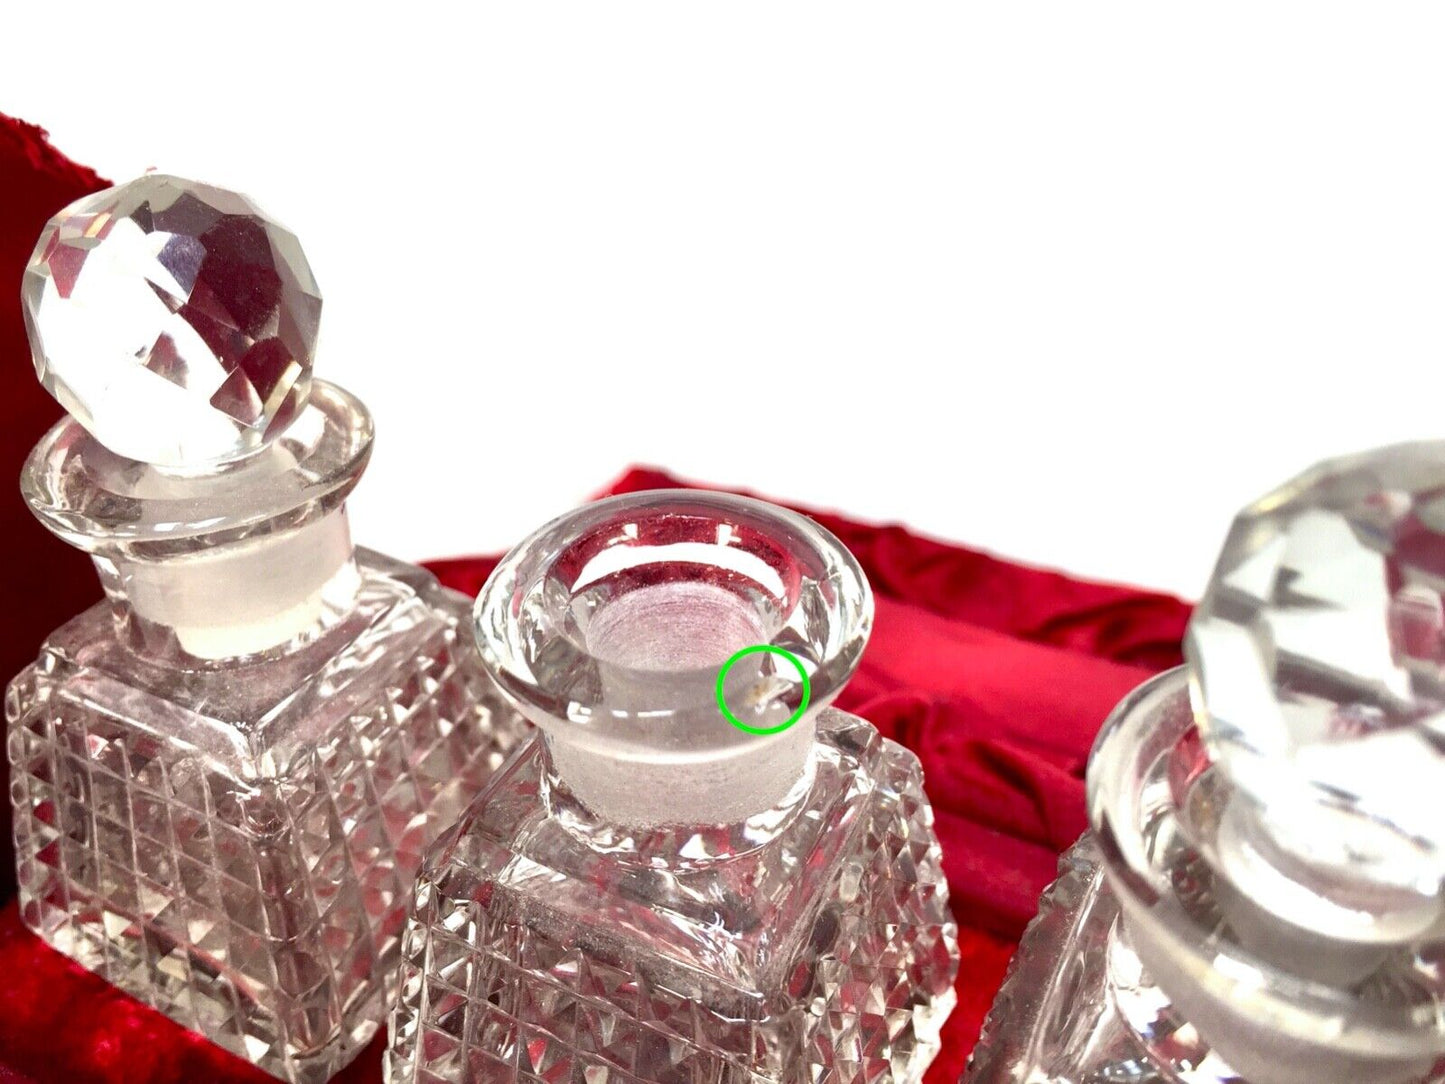 Antique Set of Ladies Cut Glass Perfume Scent Bottles in Handbag Carry Case Box